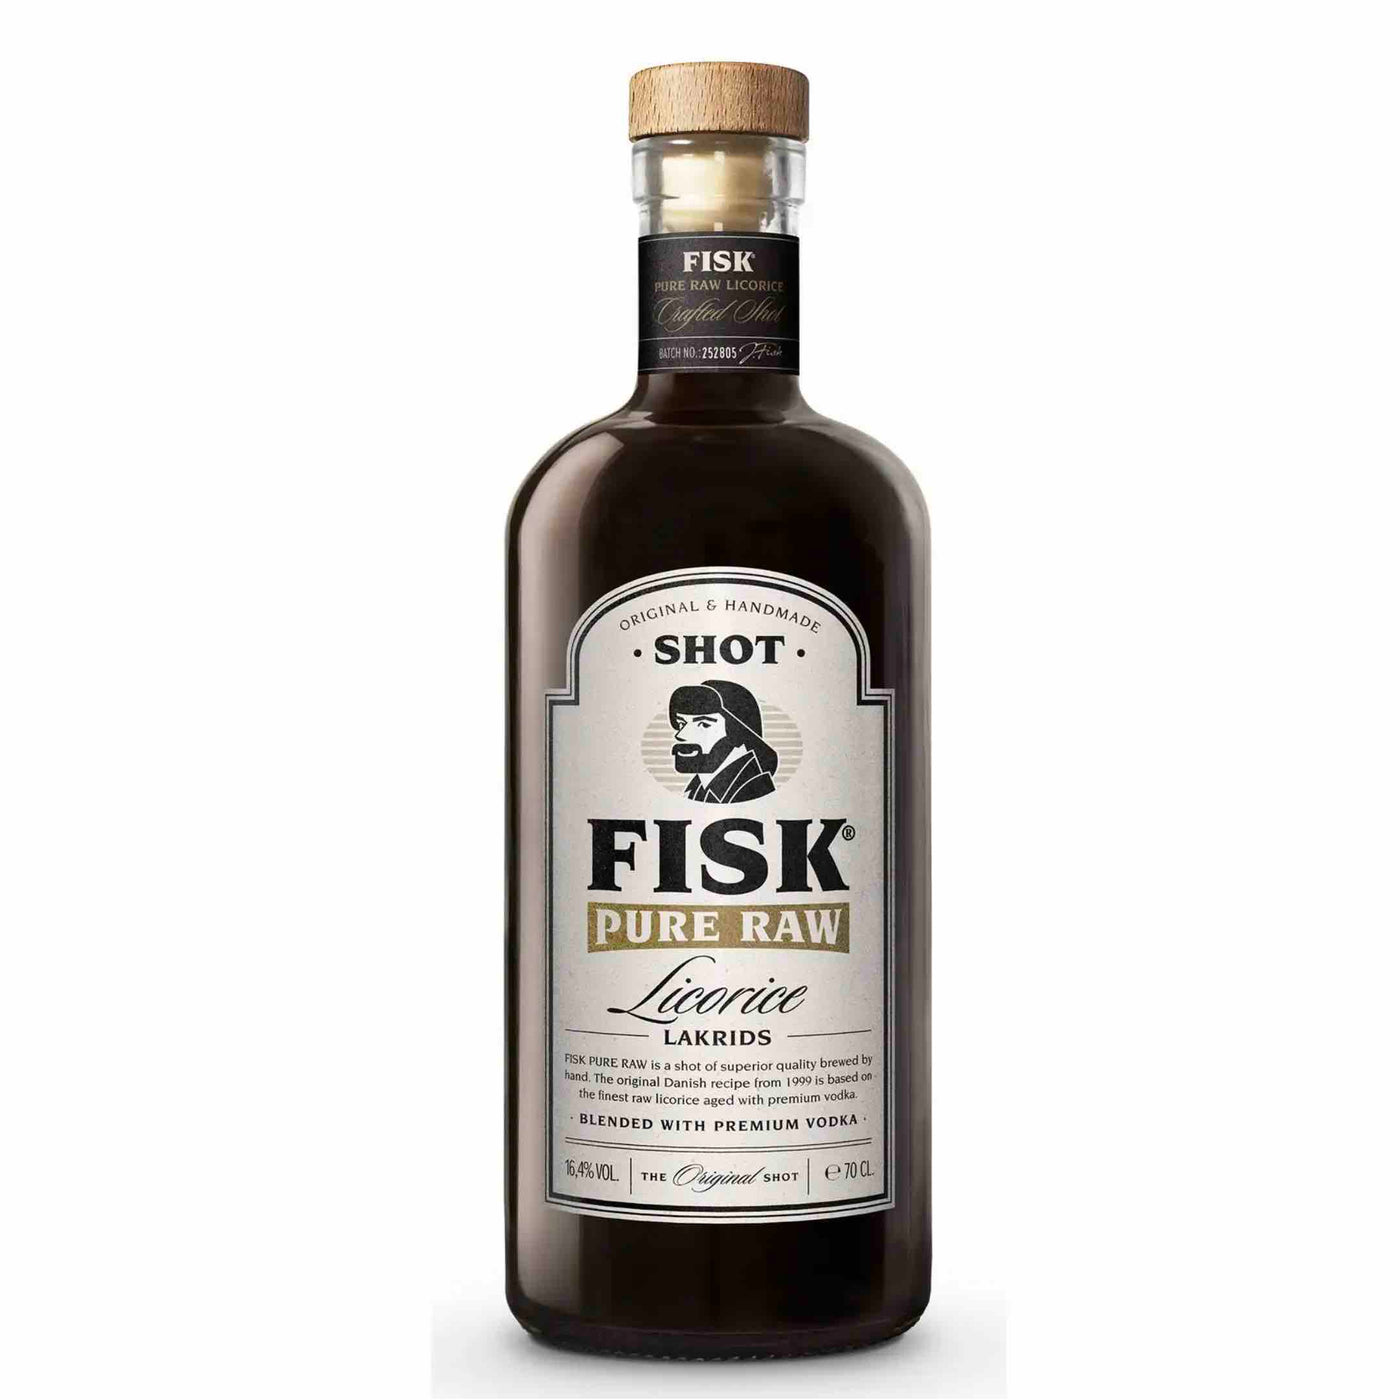 Fisk Pure Raw Liquorice, 16,4%, 0,7L